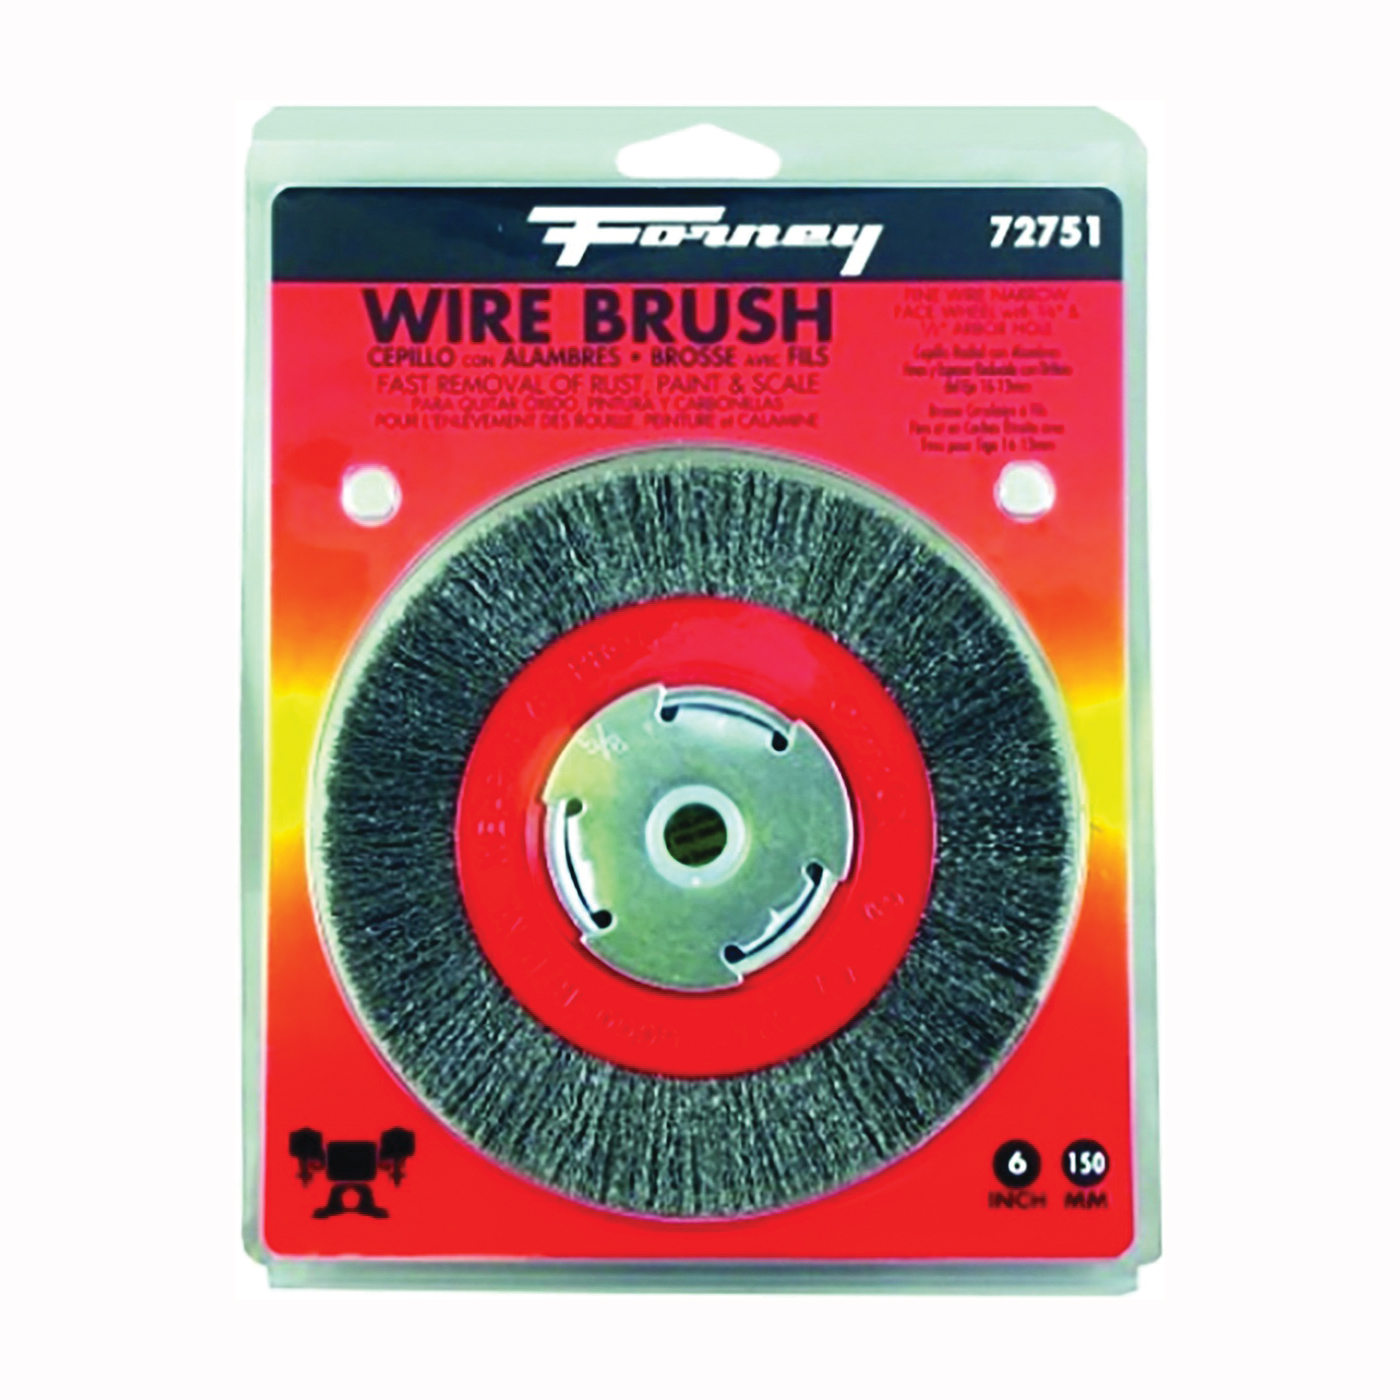 72751 Wire Bench Wheel Brush, 6 in Dia, 1/2 to 5/8 in Arbor/Shank, 0.008 in Dia Bristle